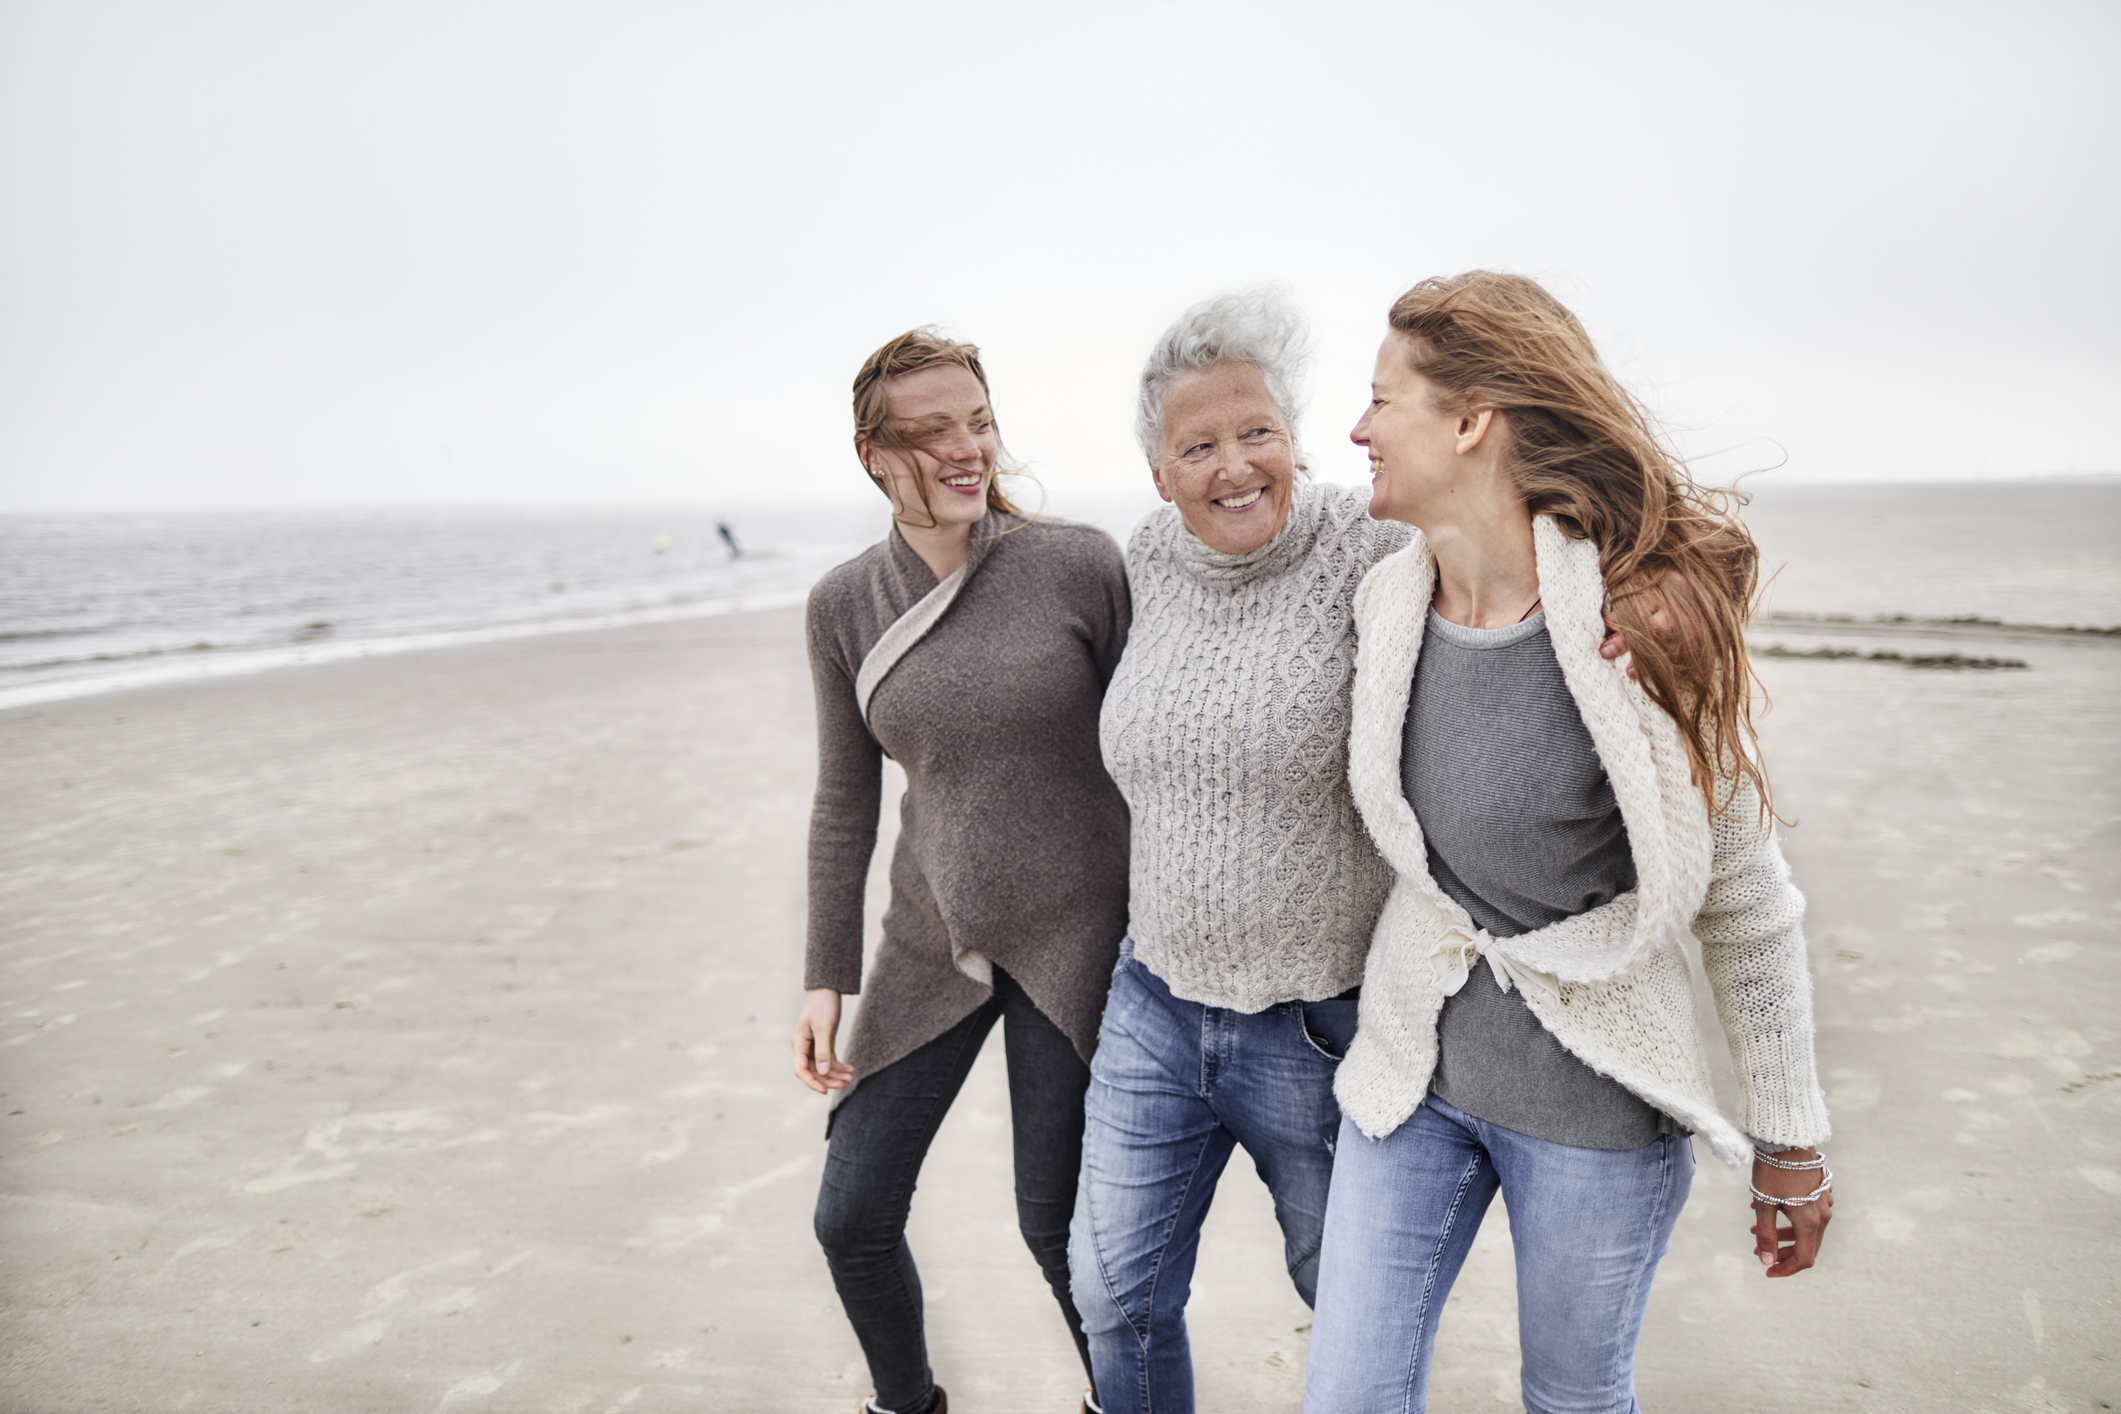 Three generations of women walk along a windy beach